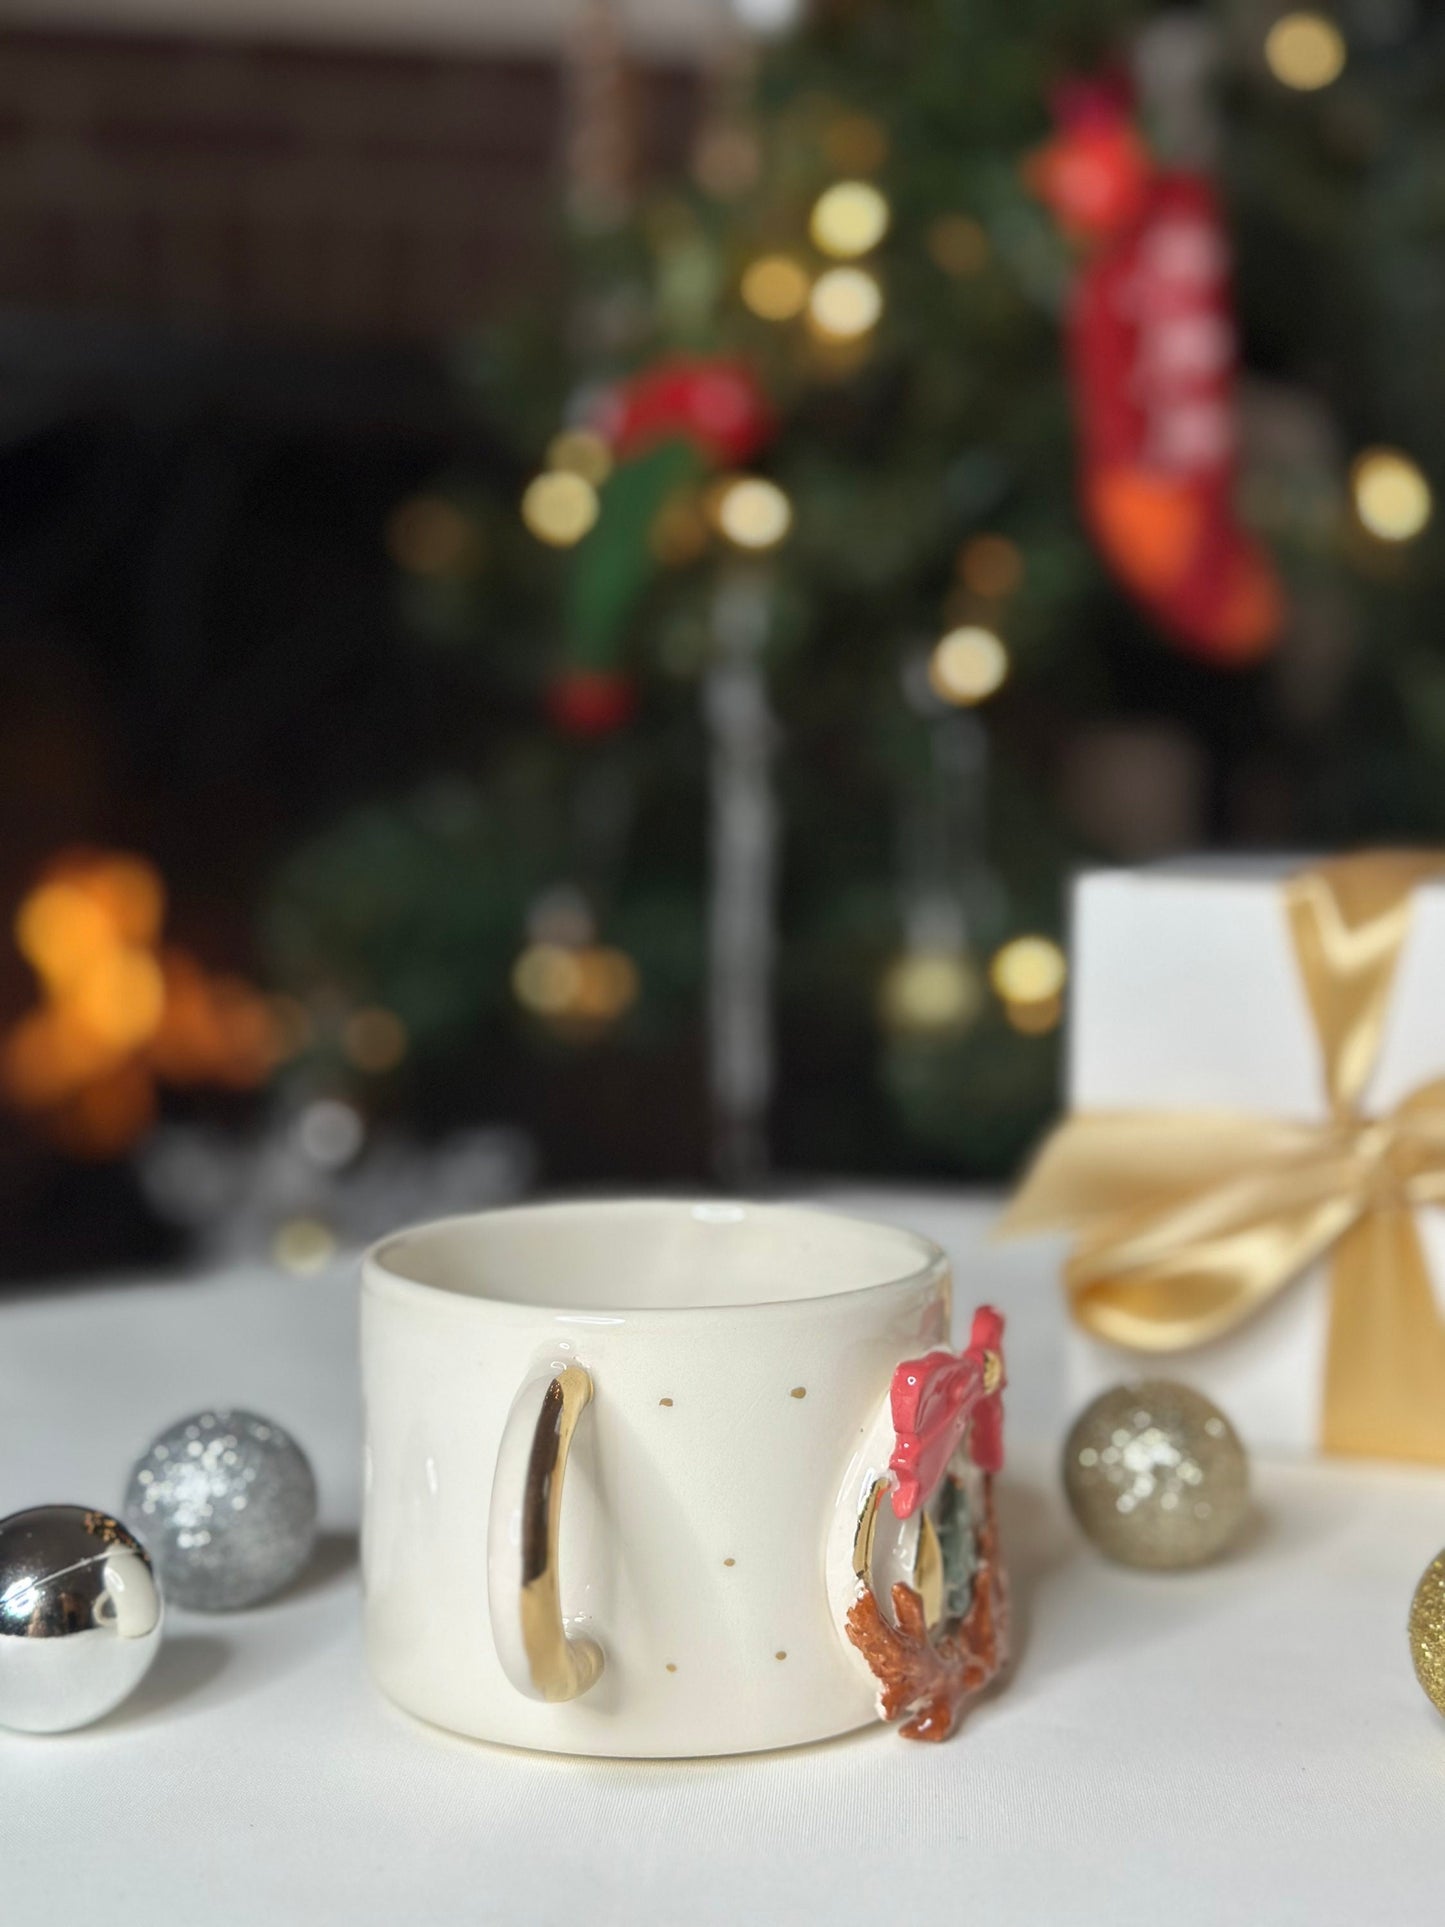 24k Gold Handmade Ceramic Mug 'Christmas Wreath'